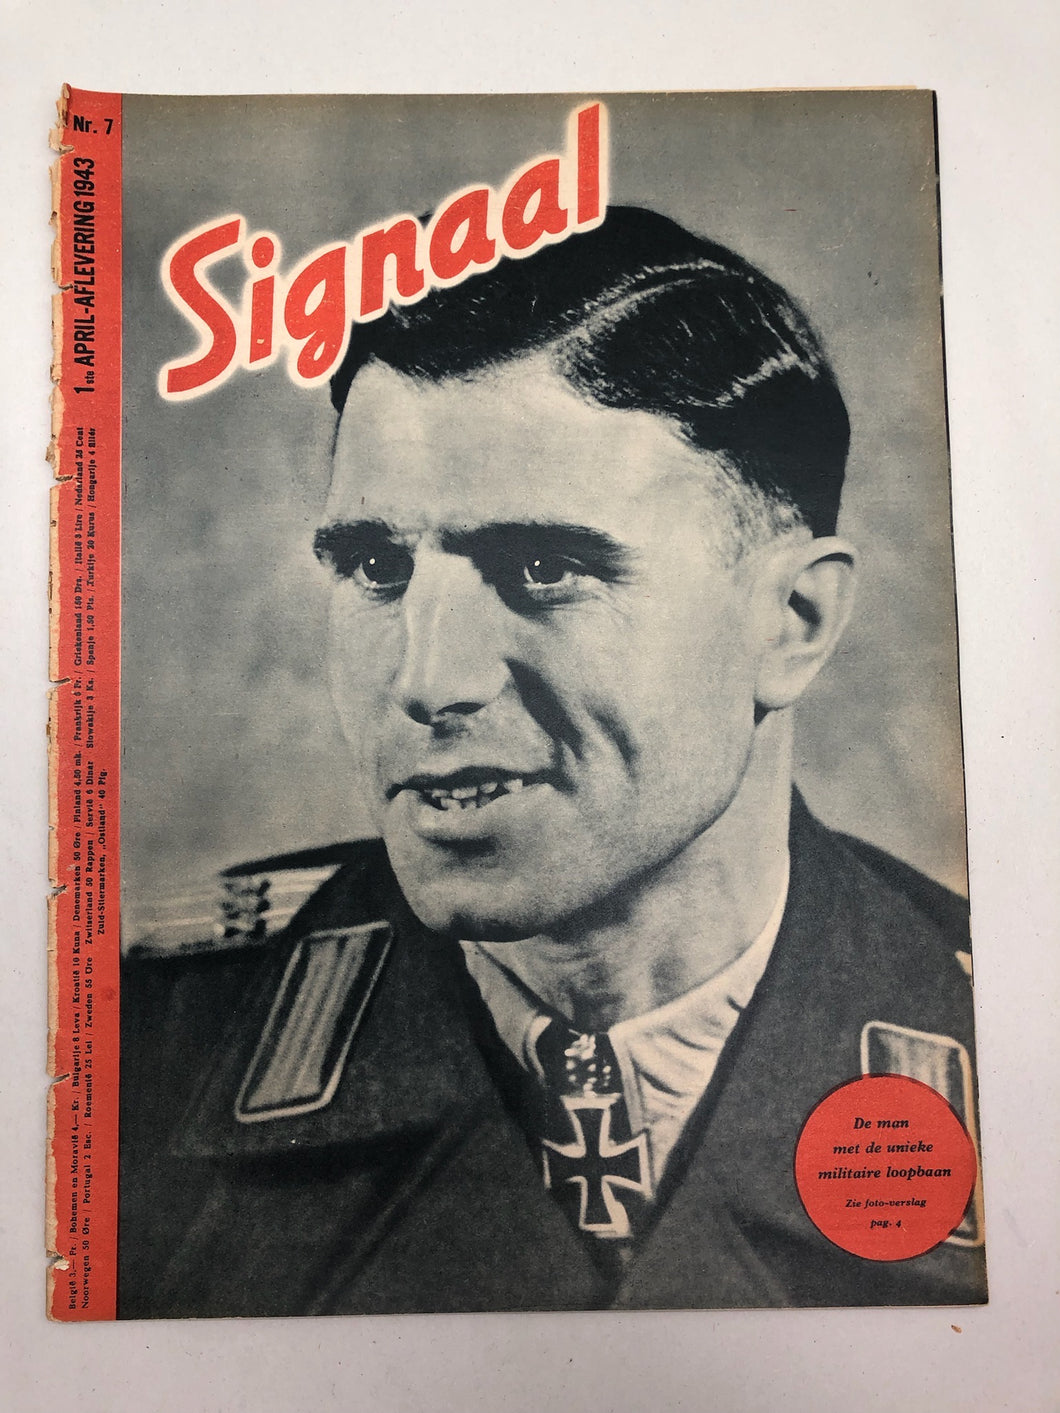 Original Dutch Language WW2 Propaganda Signaal Magazine - No.7 1943